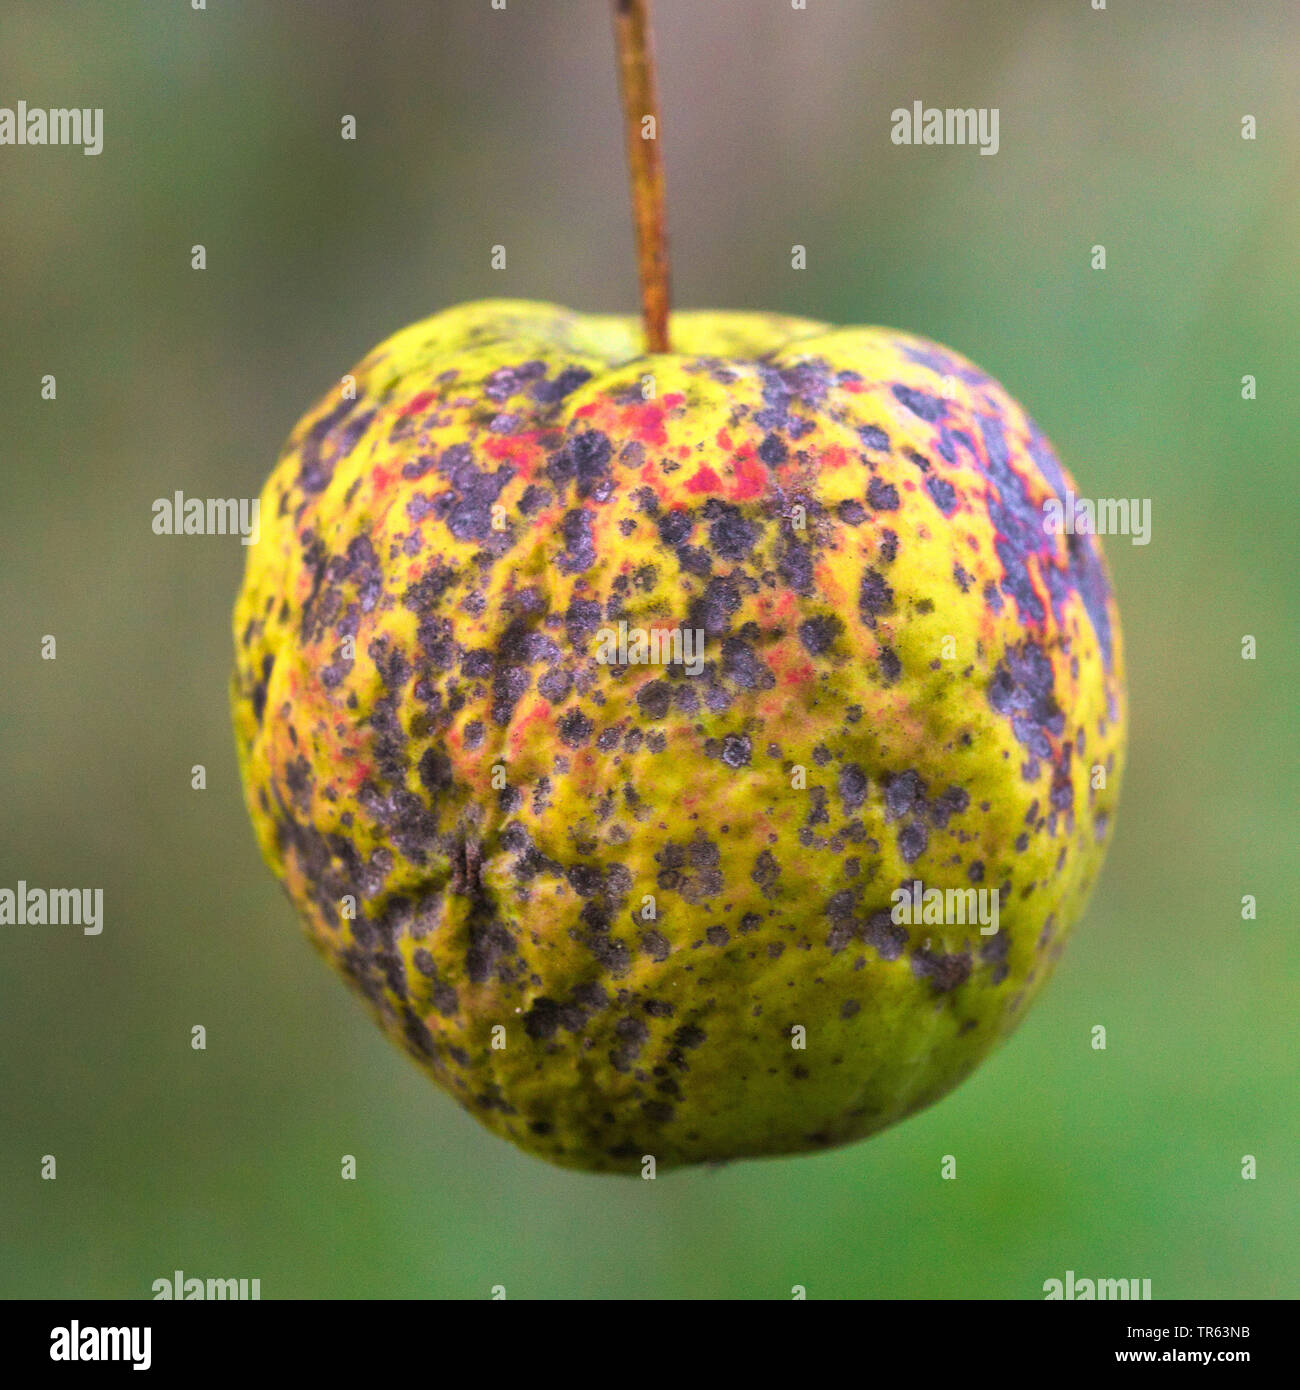 apple tree (Malus domestica), apple of cultivar Golden Delicious with Apple scab disease, Venturia inaequalis, Germany, North Rhine-Westphalia Stock Photo